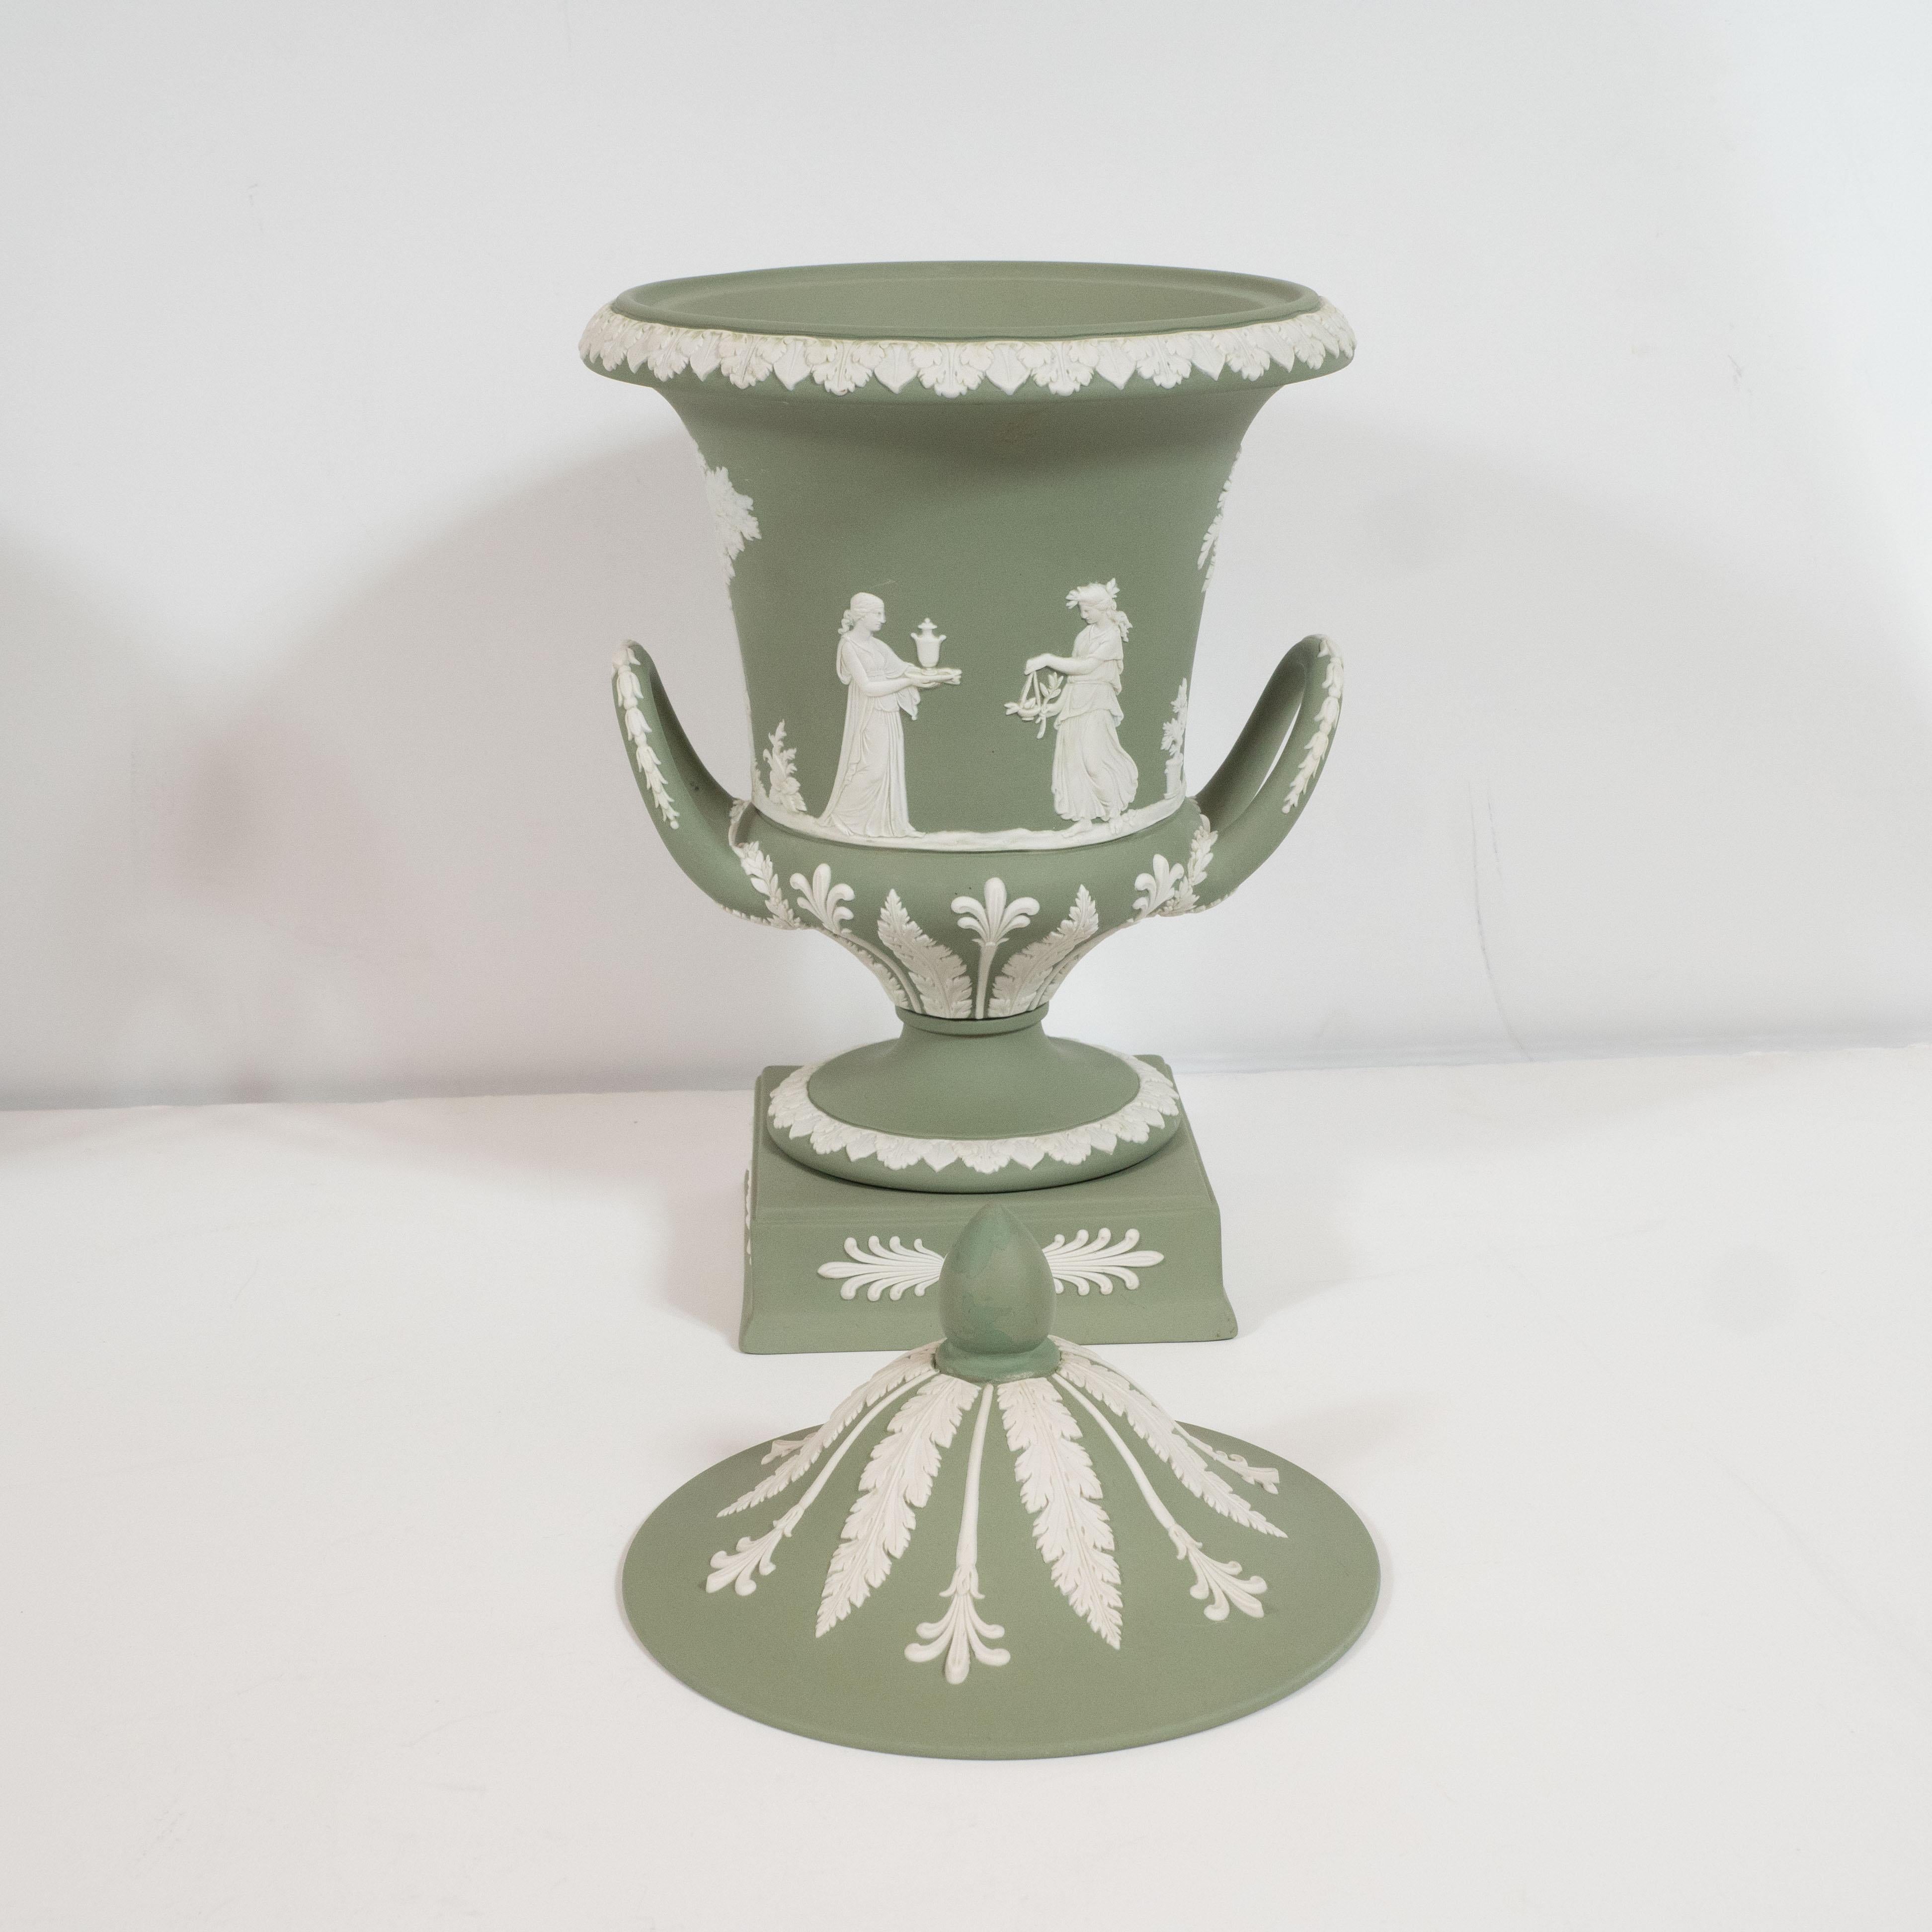 Neoclassical Jasperware Ceramic Covered Urn in Olive and White by Wedgwood 2